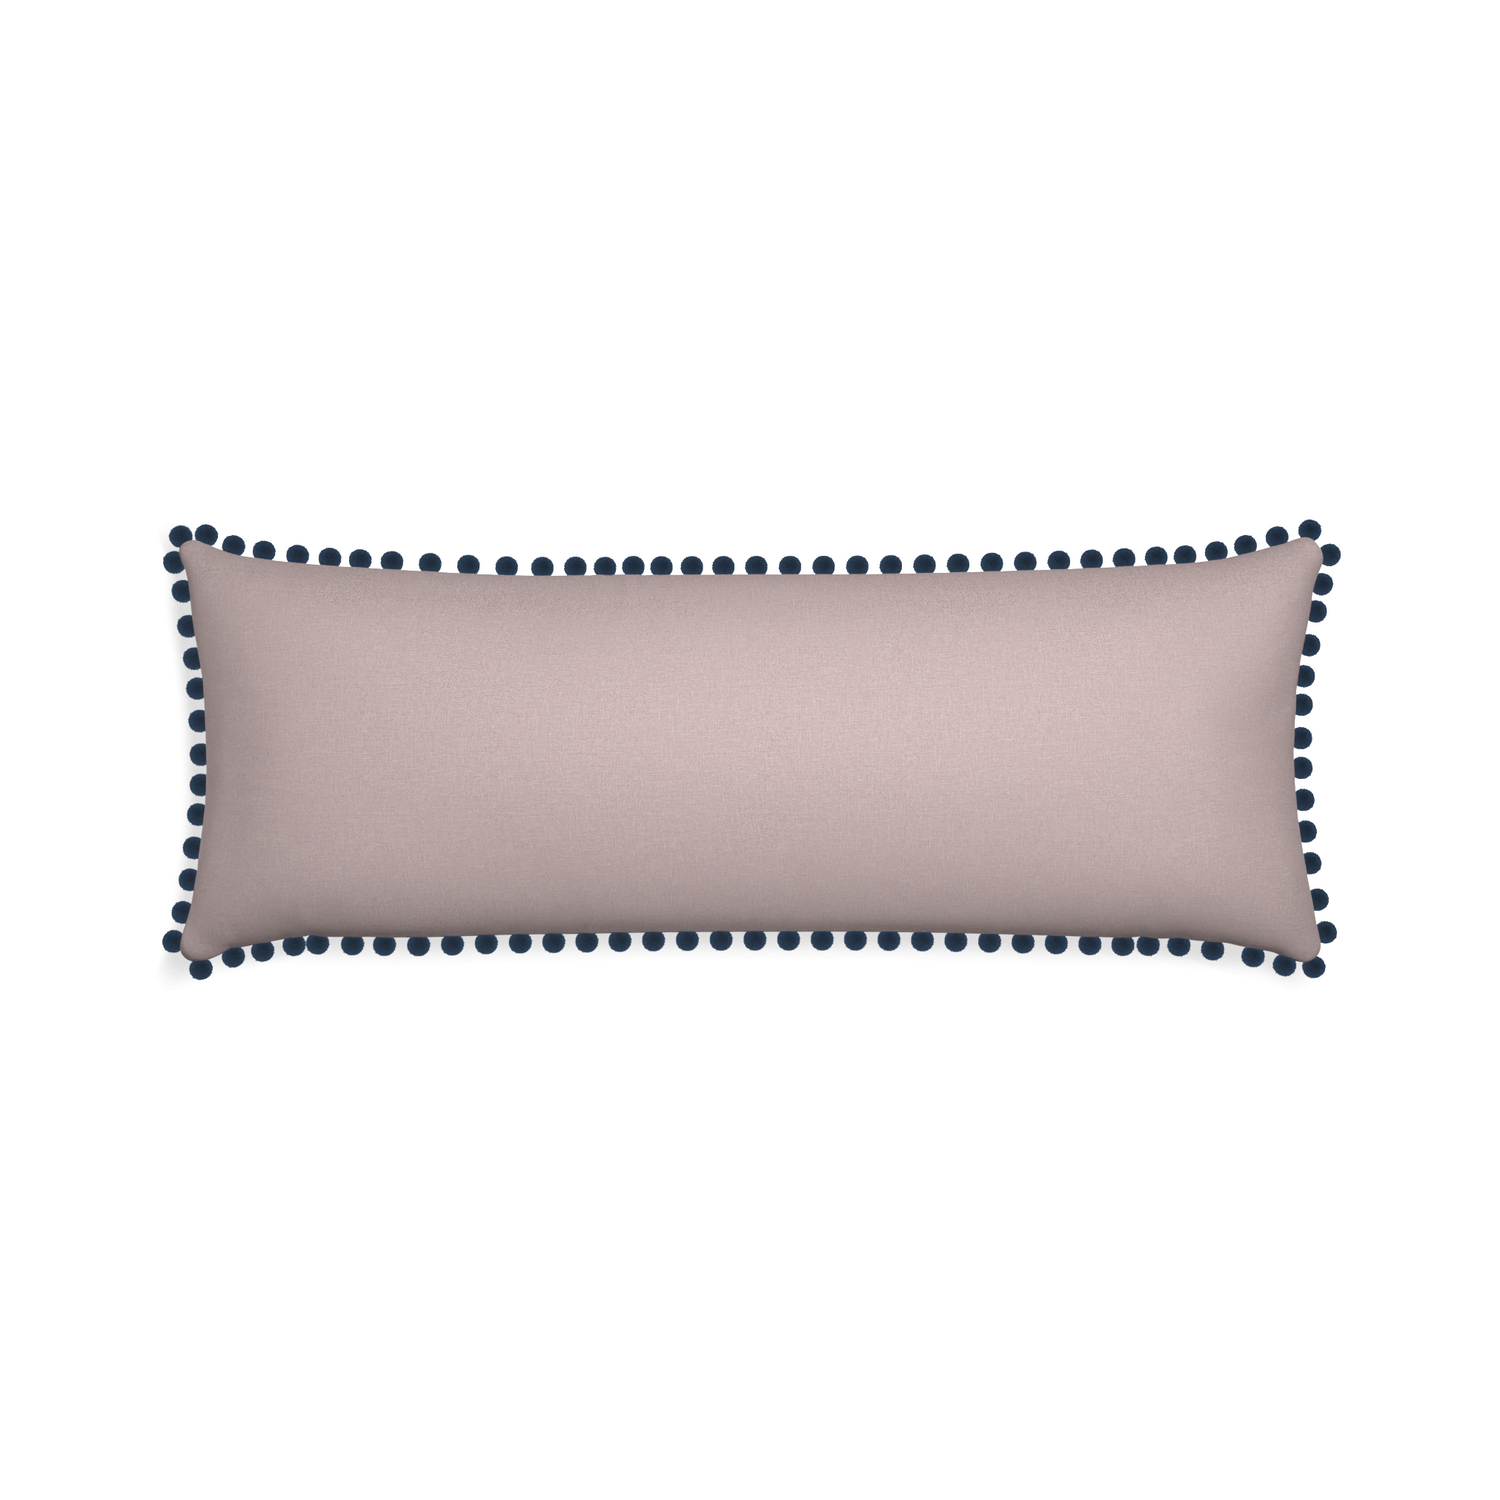 pale pink lumbar pillow with dark blue pom poms 